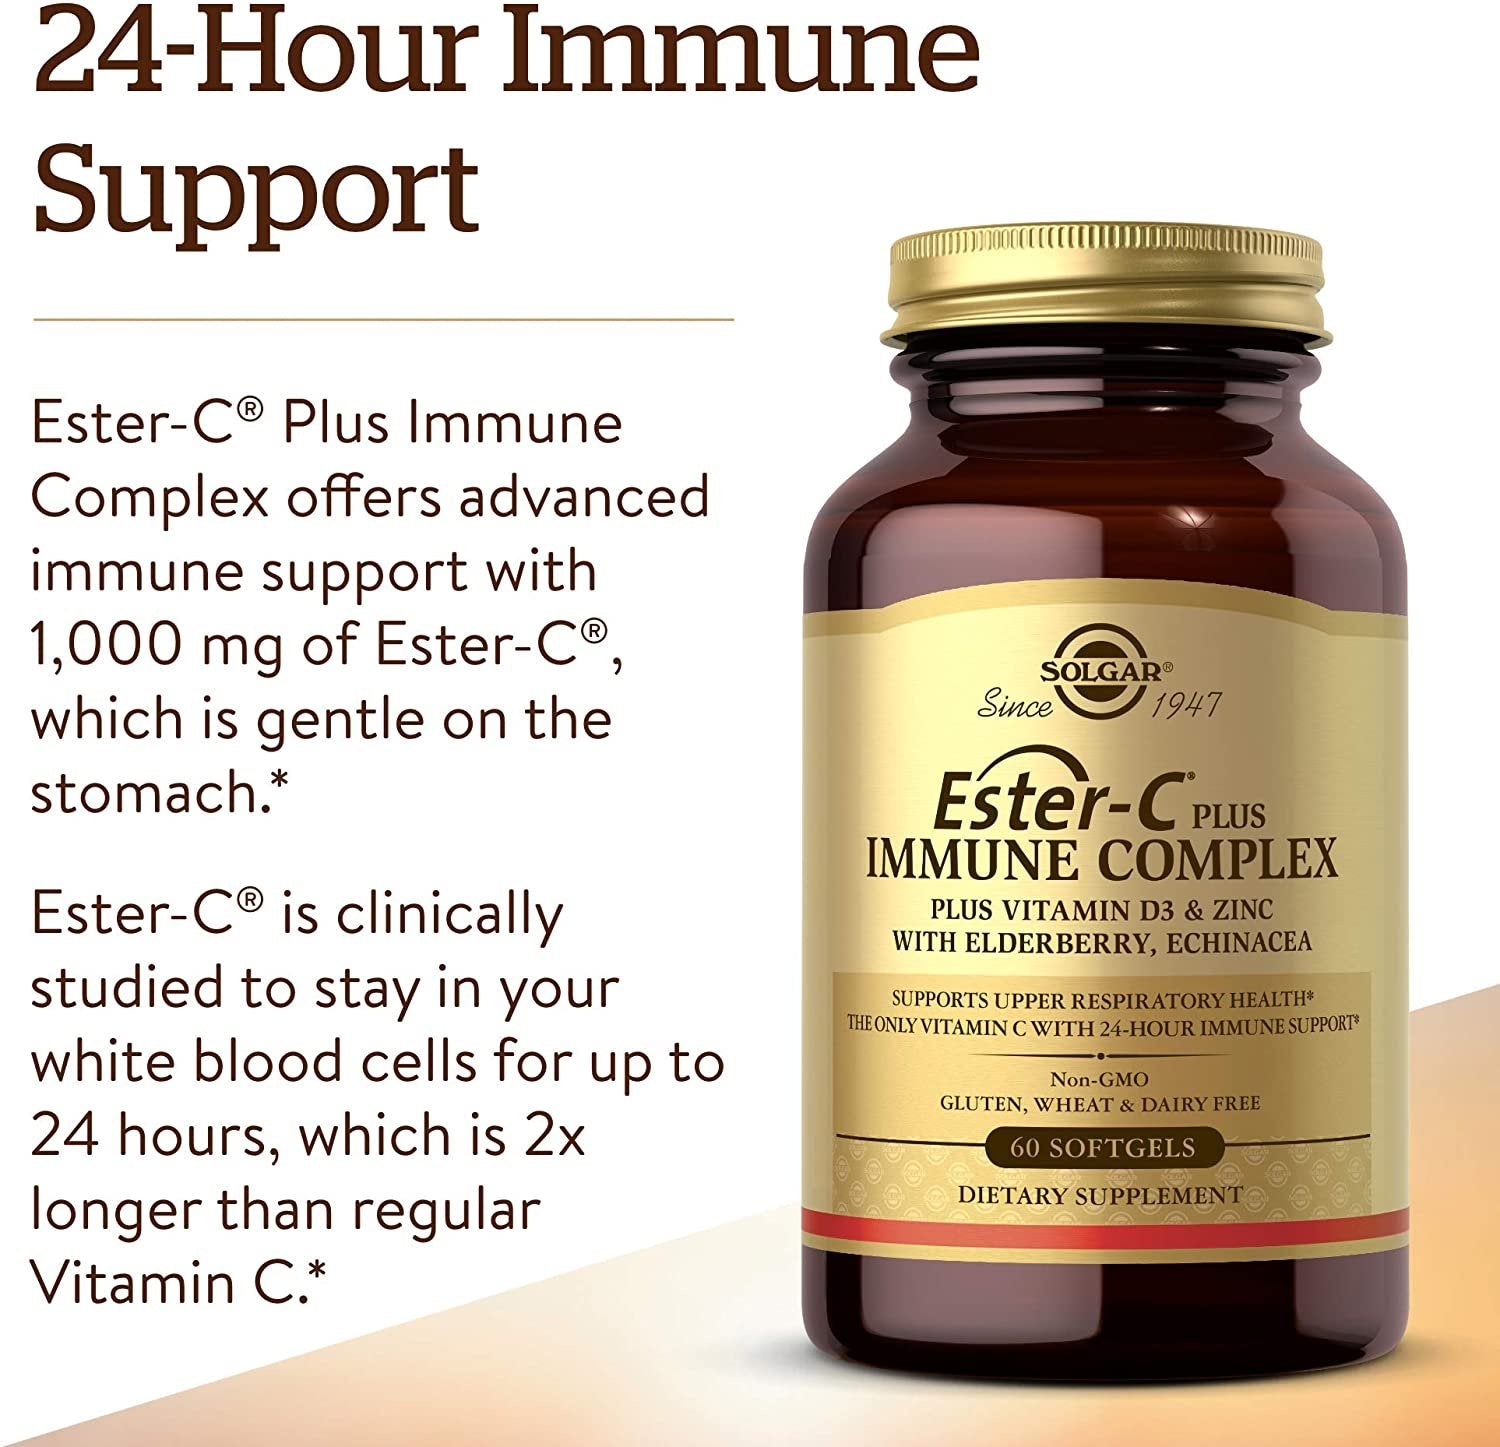 Solgar Ester-C Plus Immune Complex, 60 Softgels - 24-Hour Immune Support - Supports Upper Respiratory Health - Plus D3, Zinc, Elderberry & Echinacea - Non-GMO, Gluten Free, Dairy Free - 30 Servings